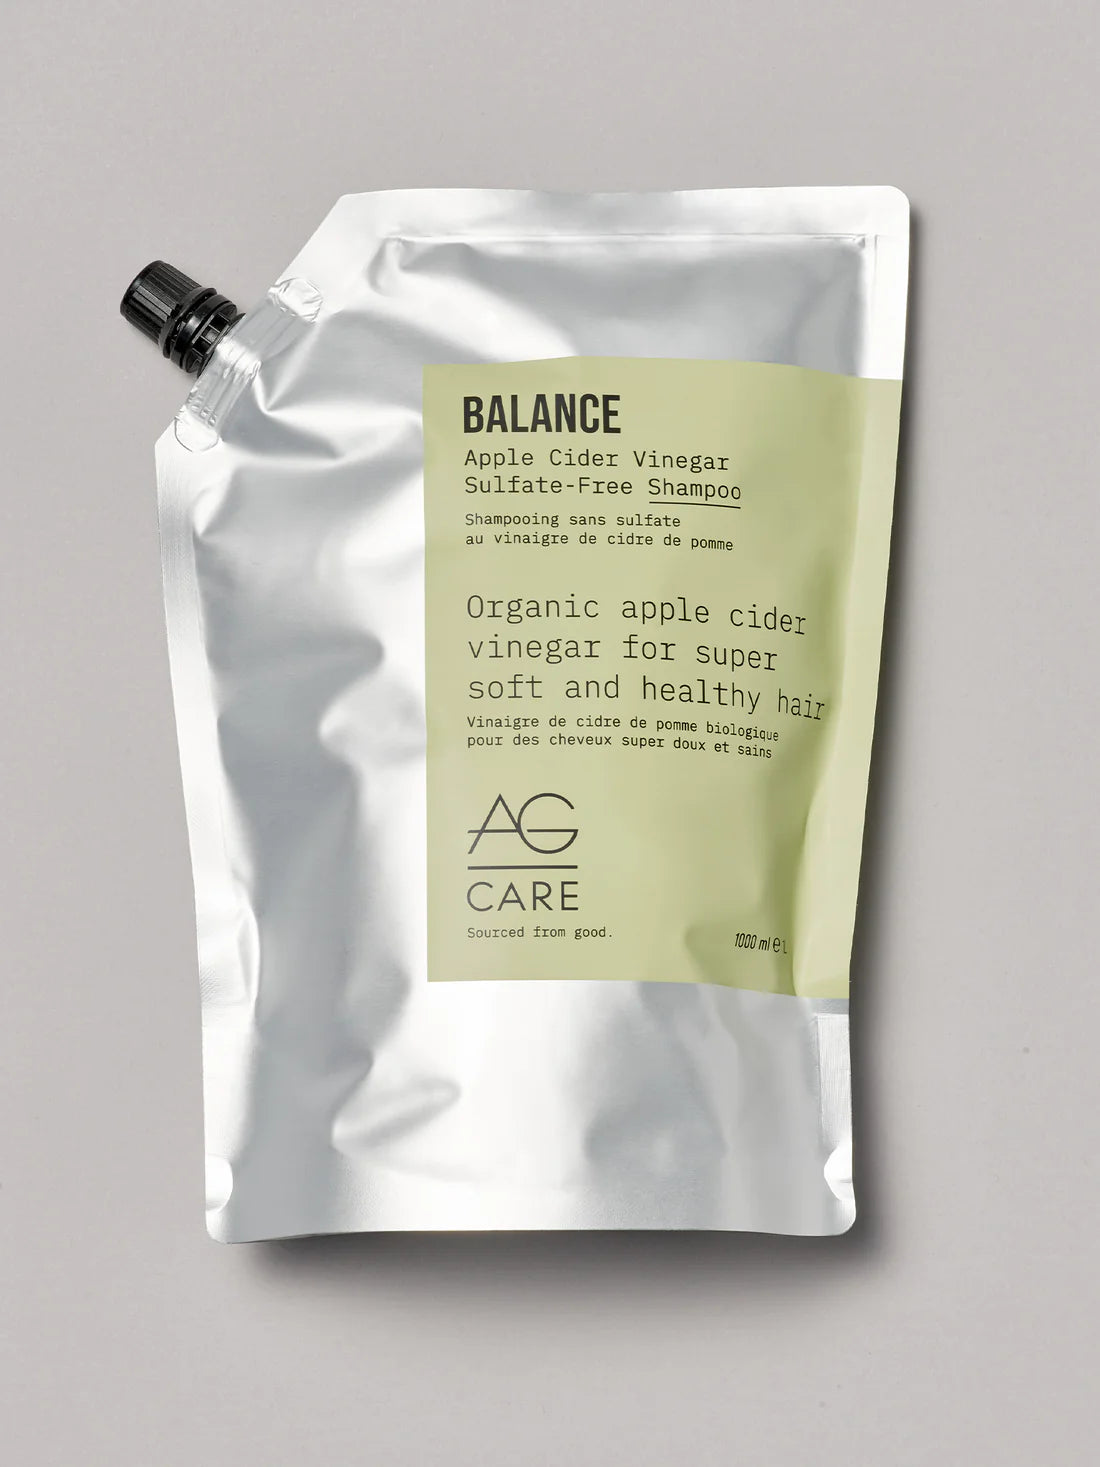 AG Care Balance Apple Cider Vinegar Sulfate-Free Shampoo 1L